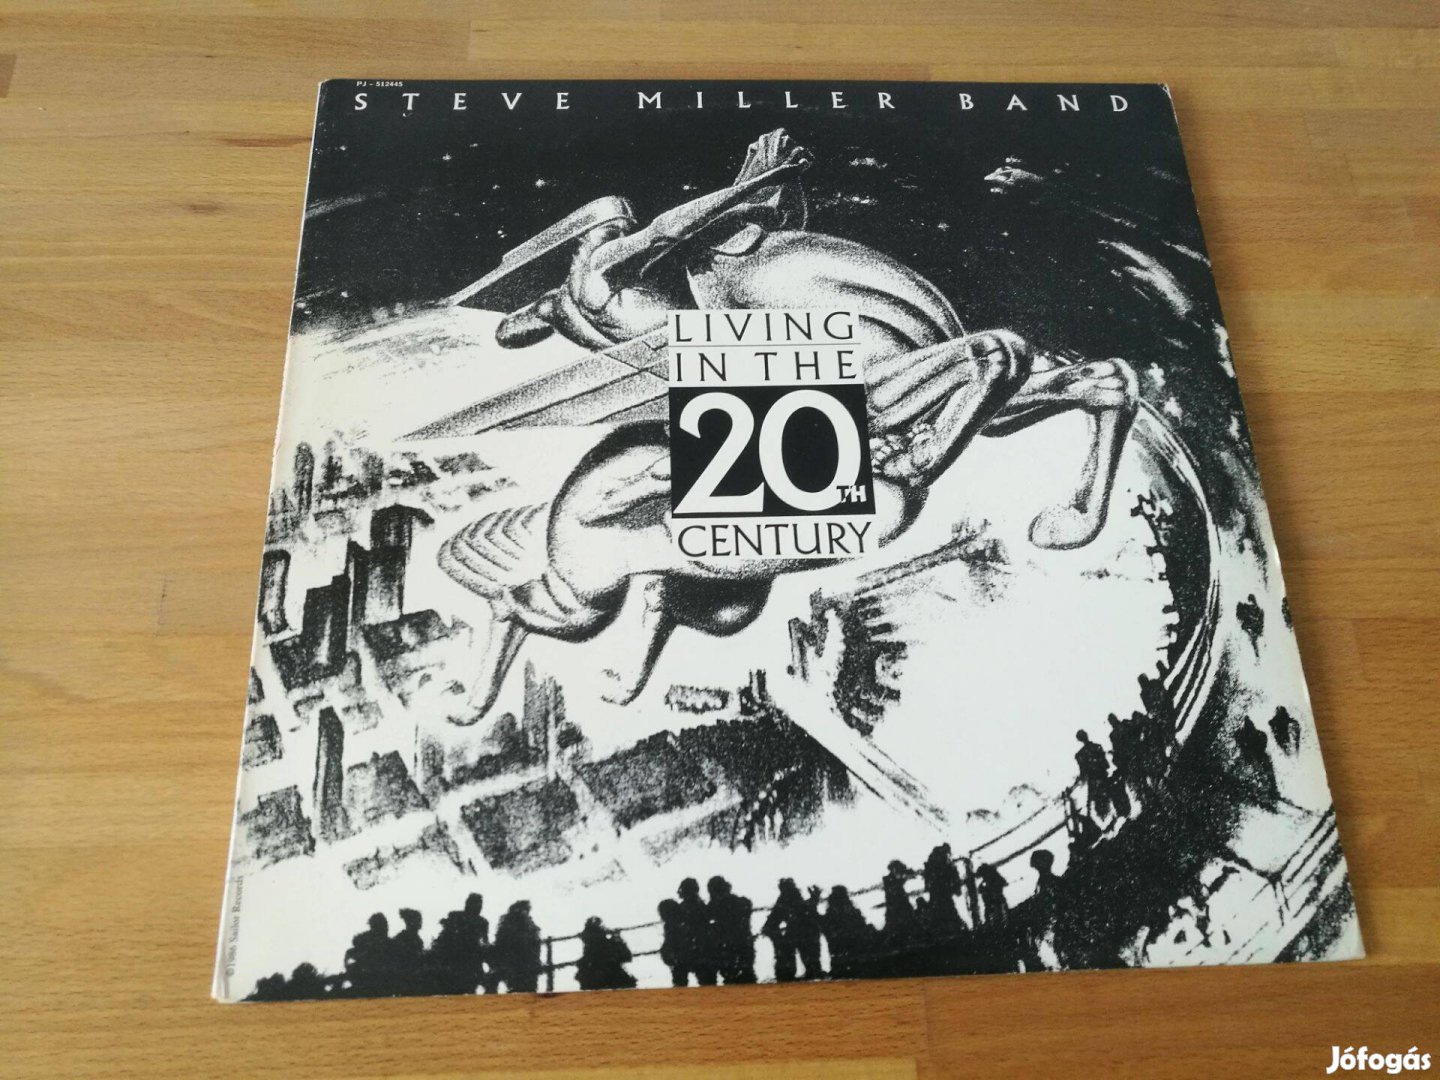 Steve Miller Band - Living in the 20th century (Sailor USA 1986 LP)